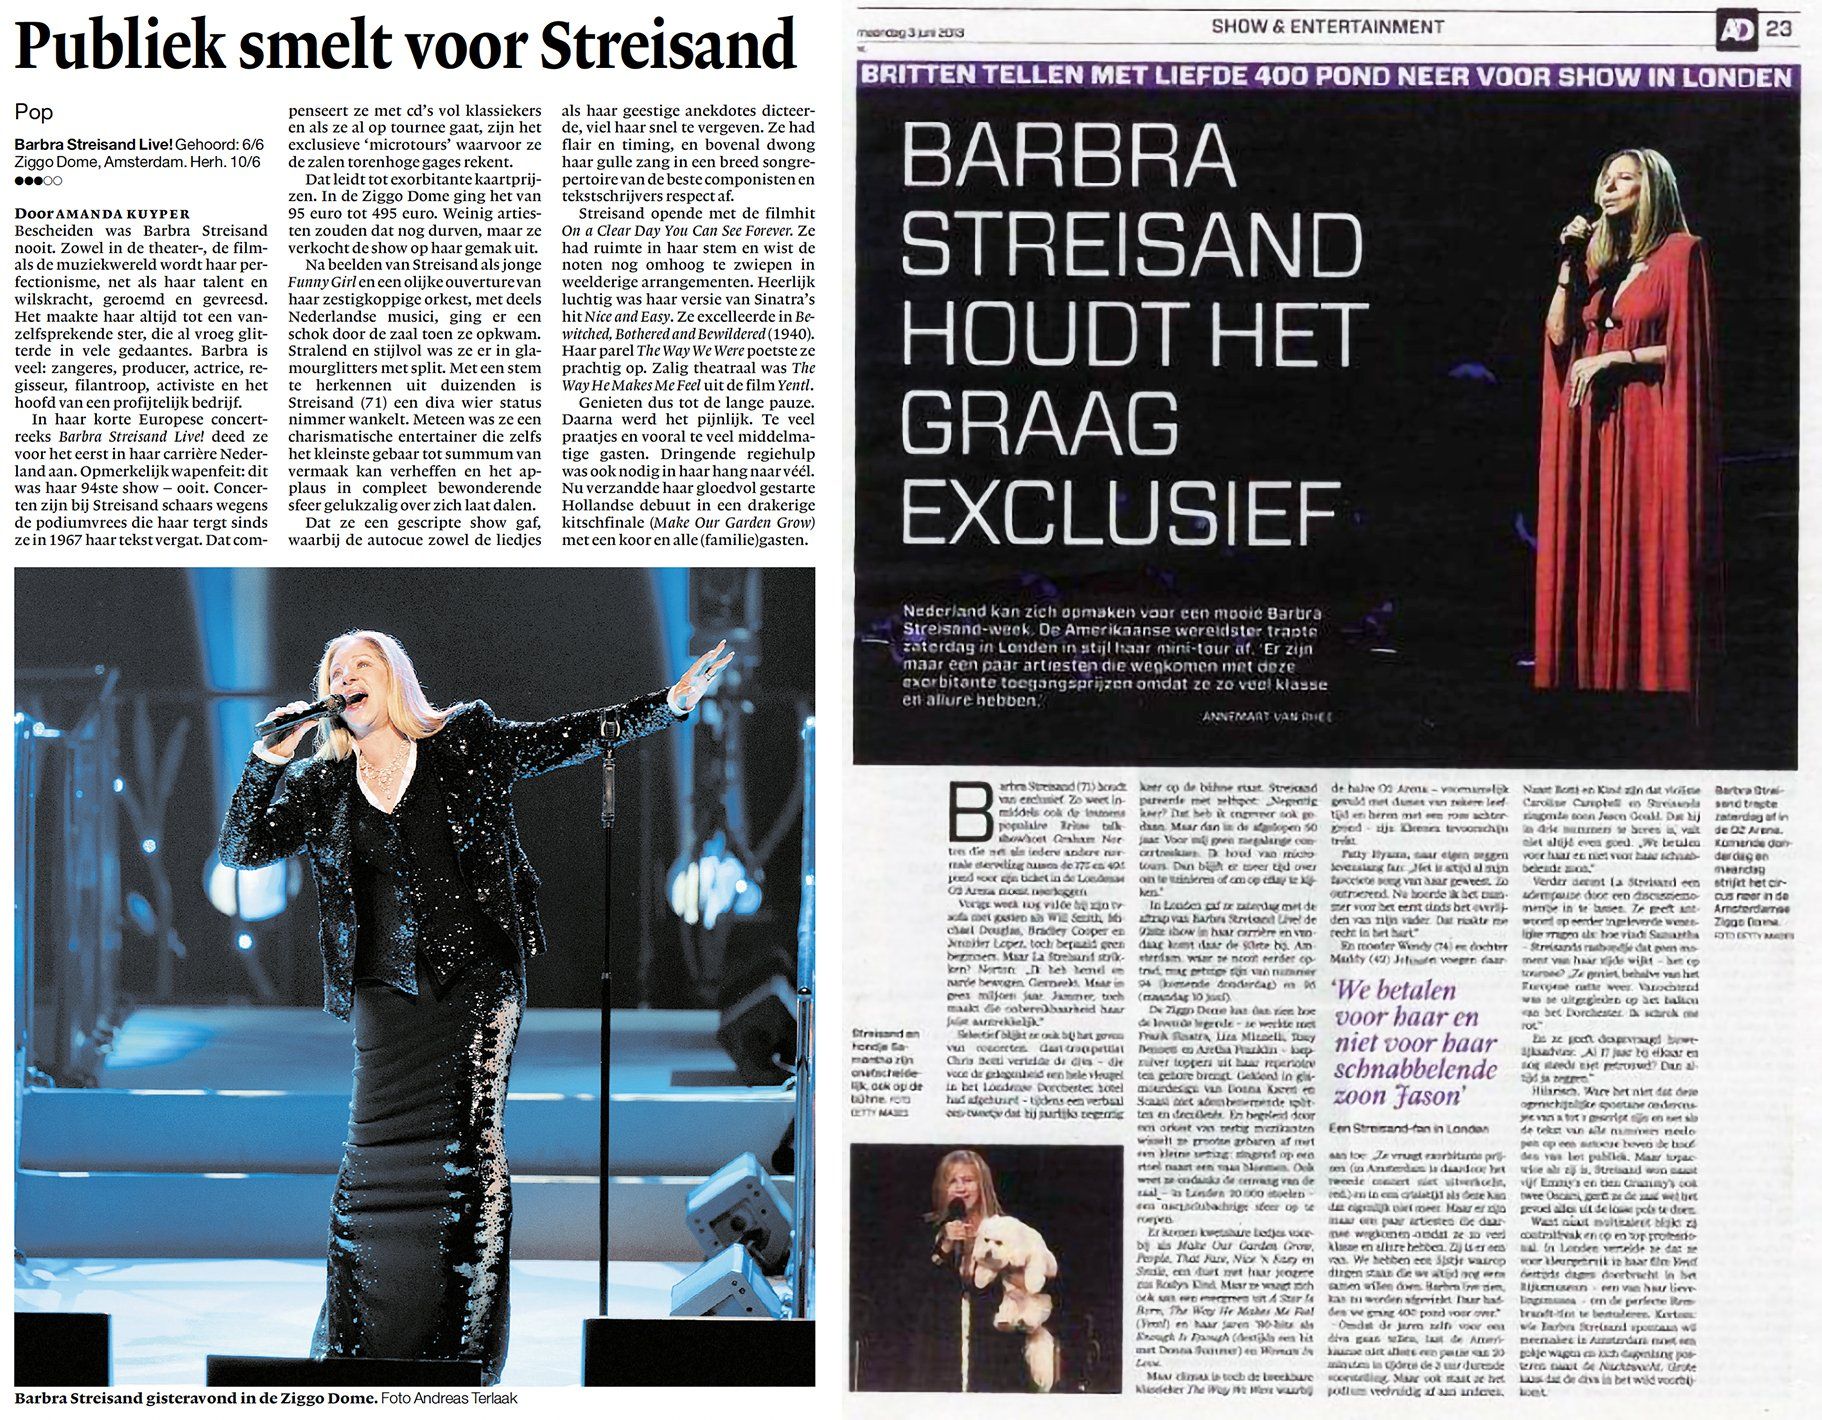 Amsterdam newspaper reviews of Barbra Streisand concert, 2013.